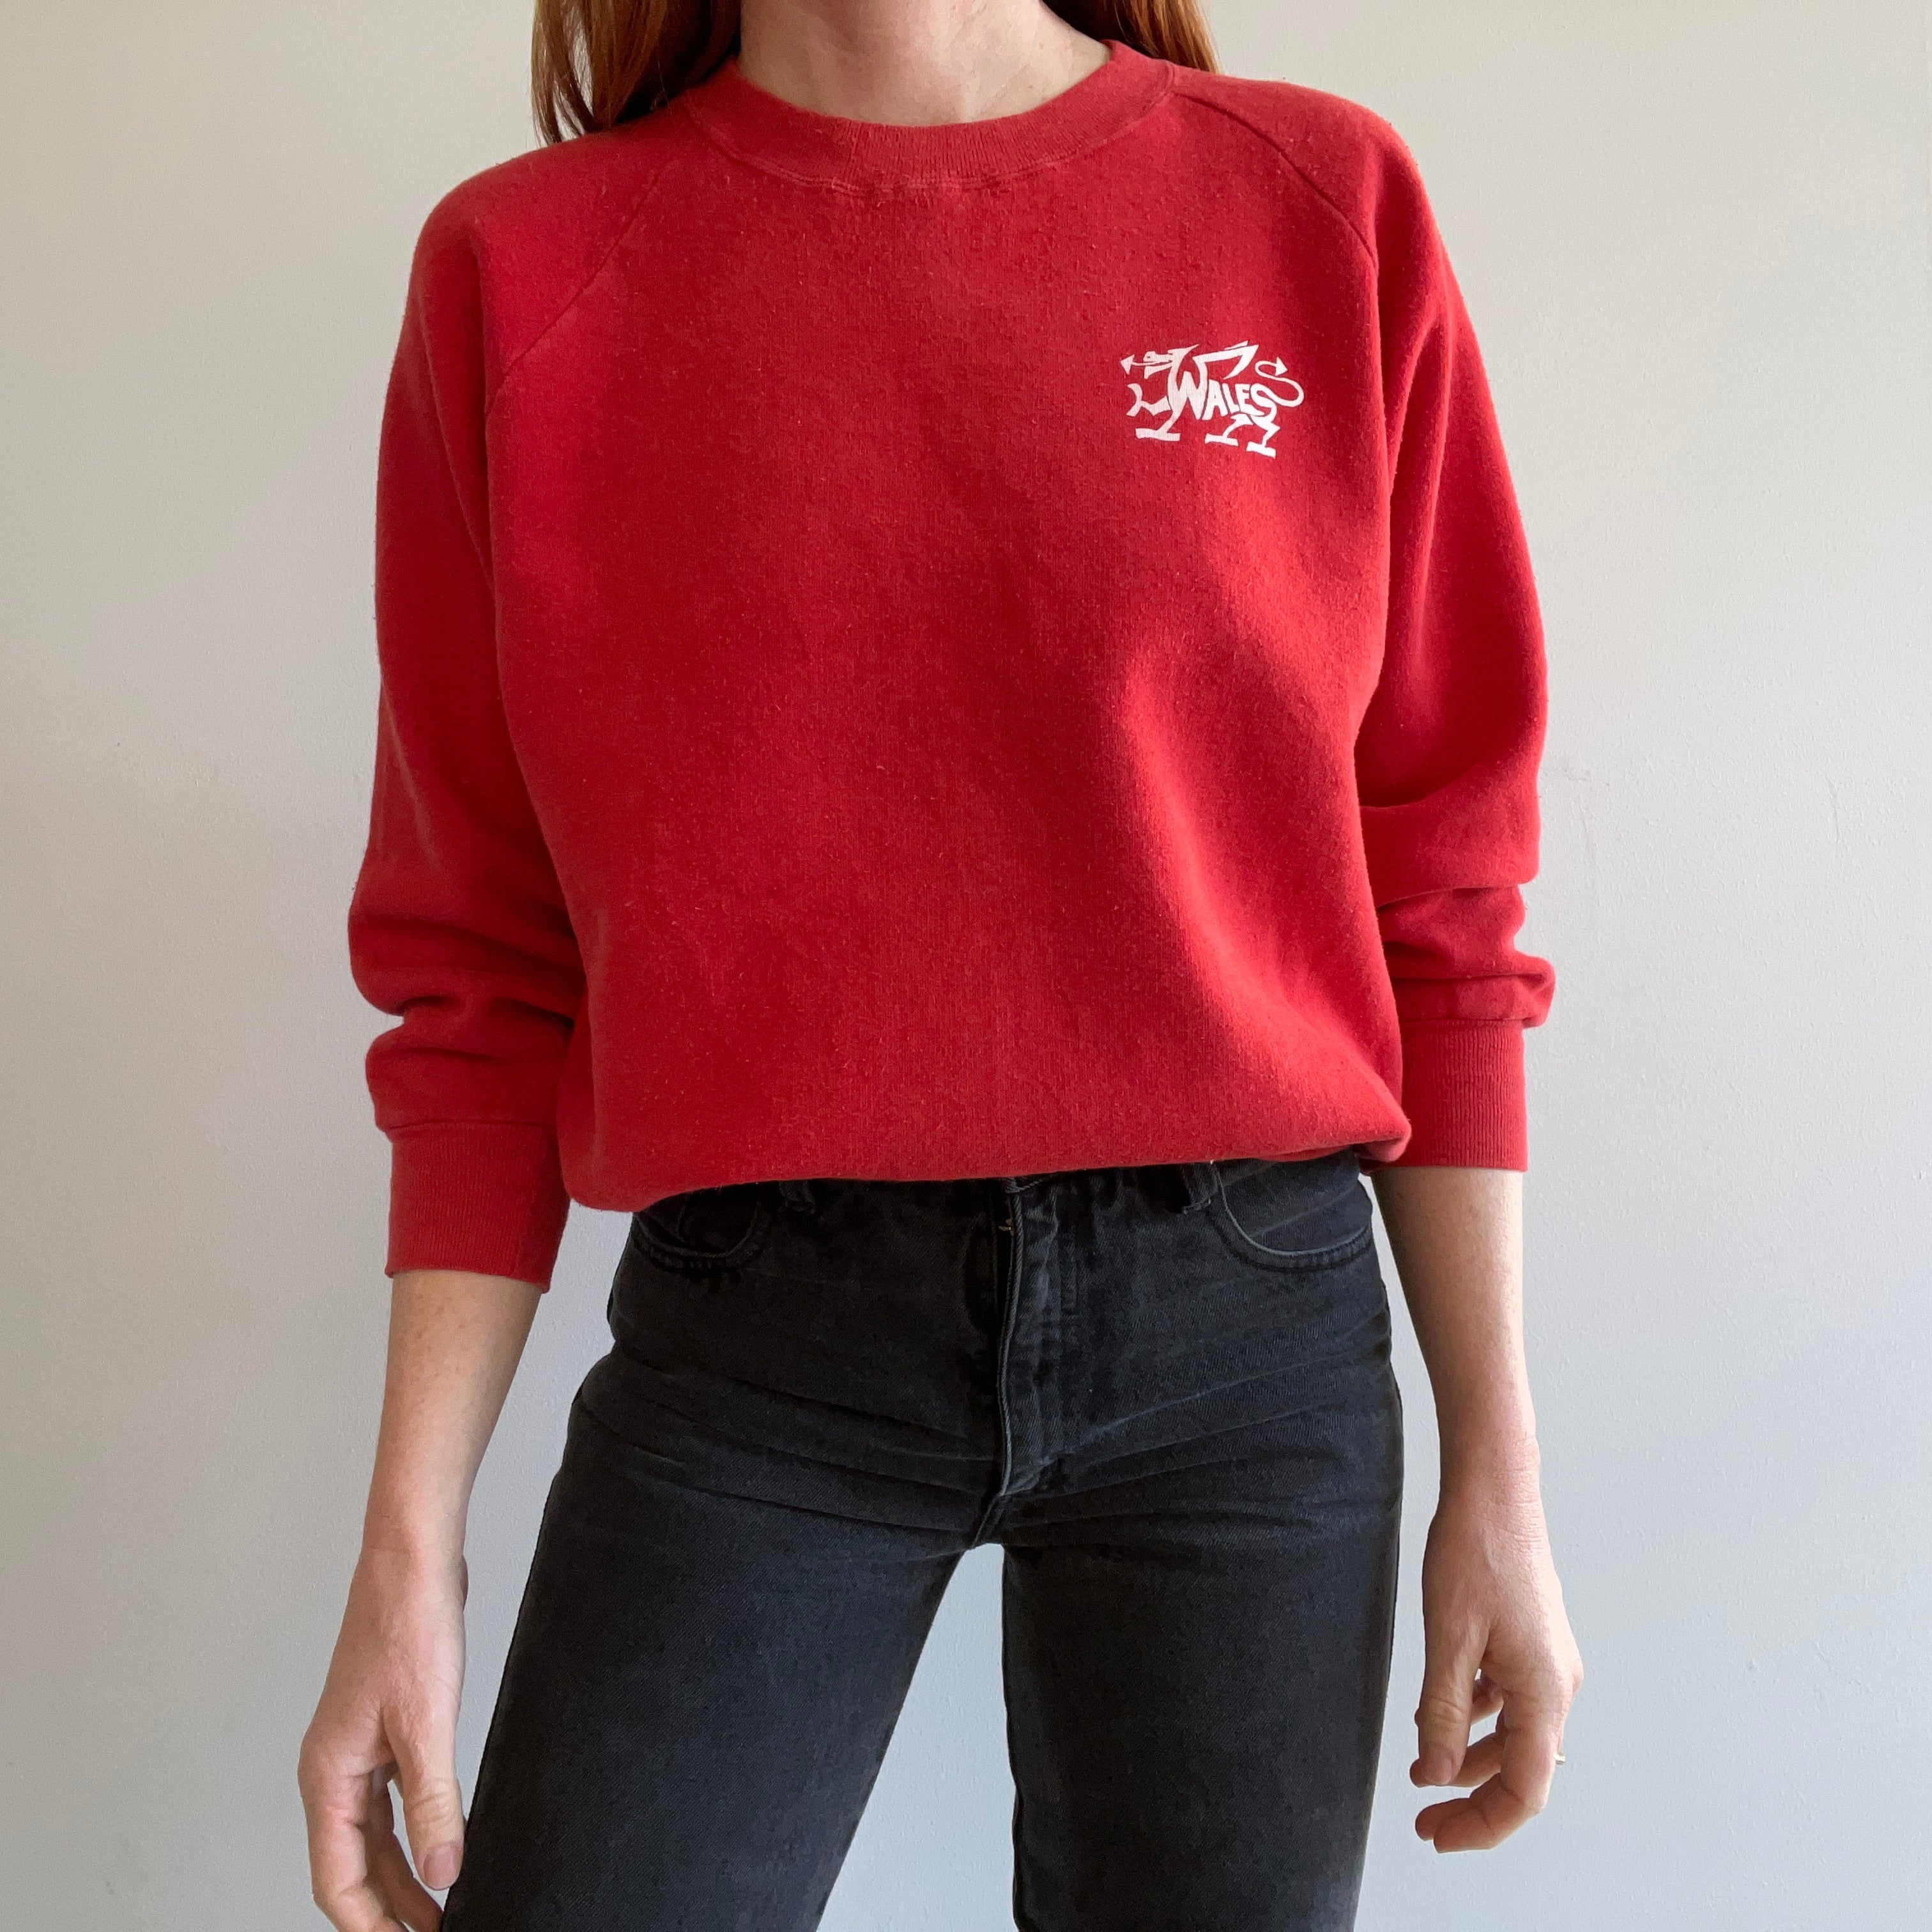 1980s Wales Sweatshirt